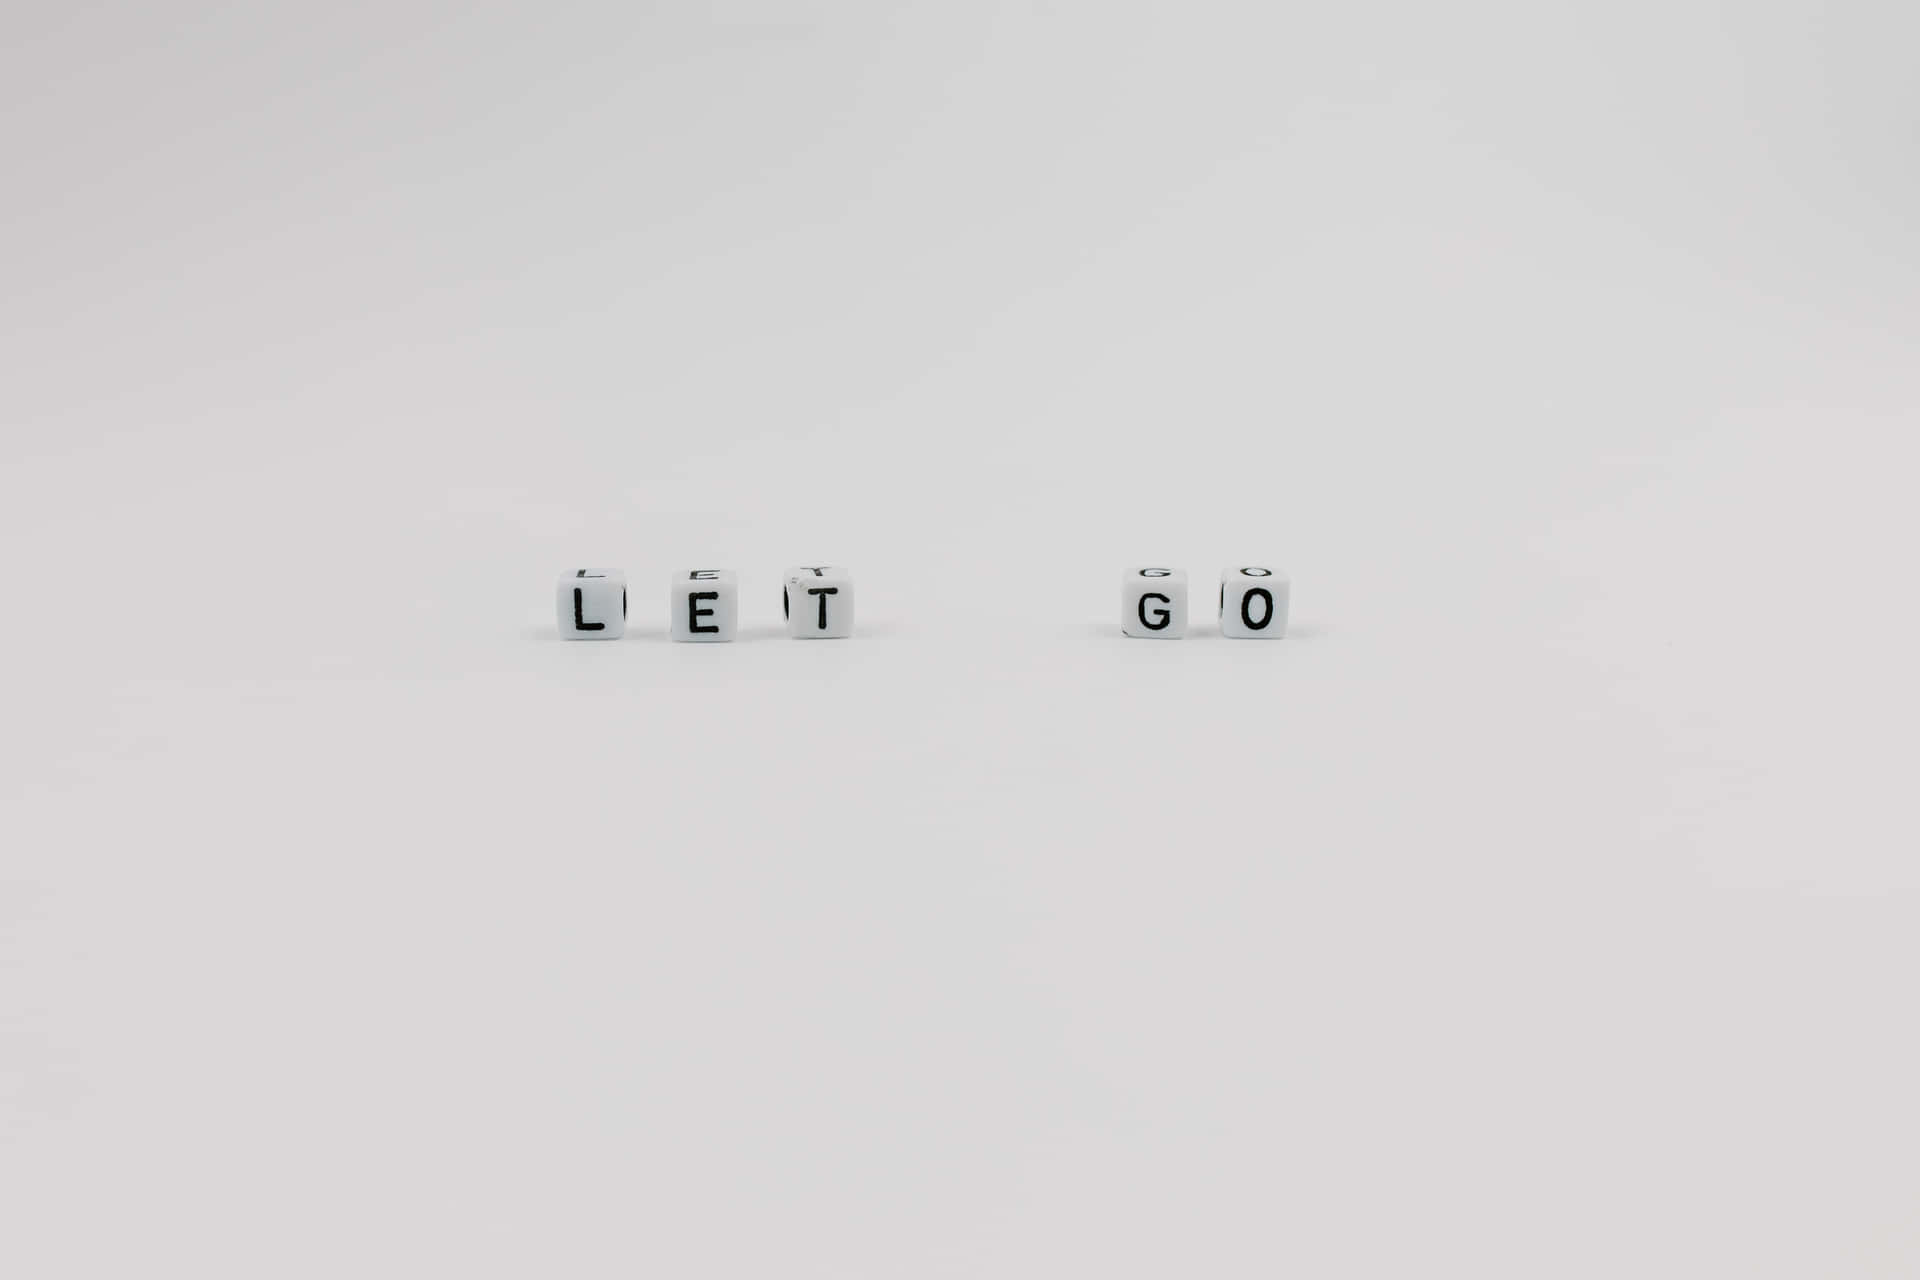 Inspirational Let It Go Blocks Message